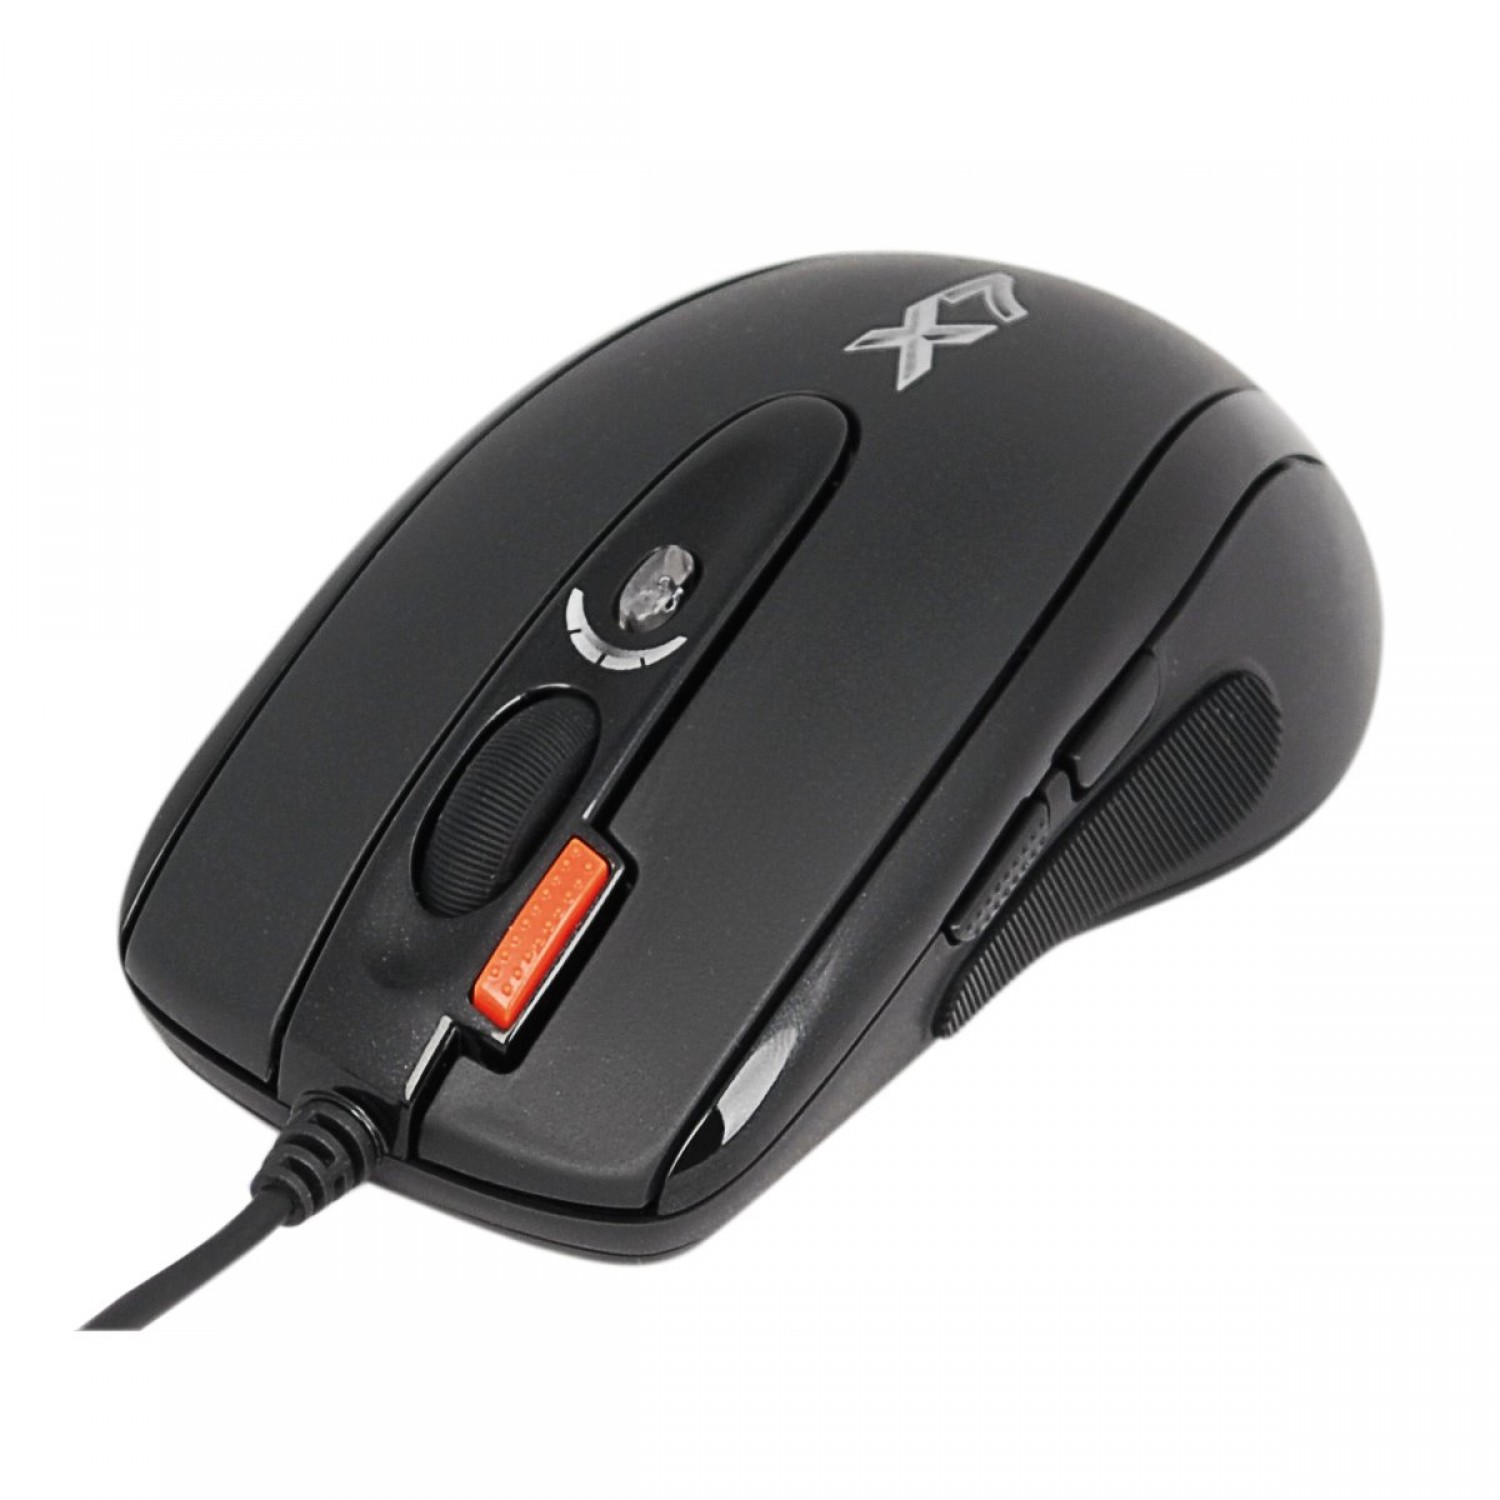 A4Tech XL50 Laser BK Gaming Mouse